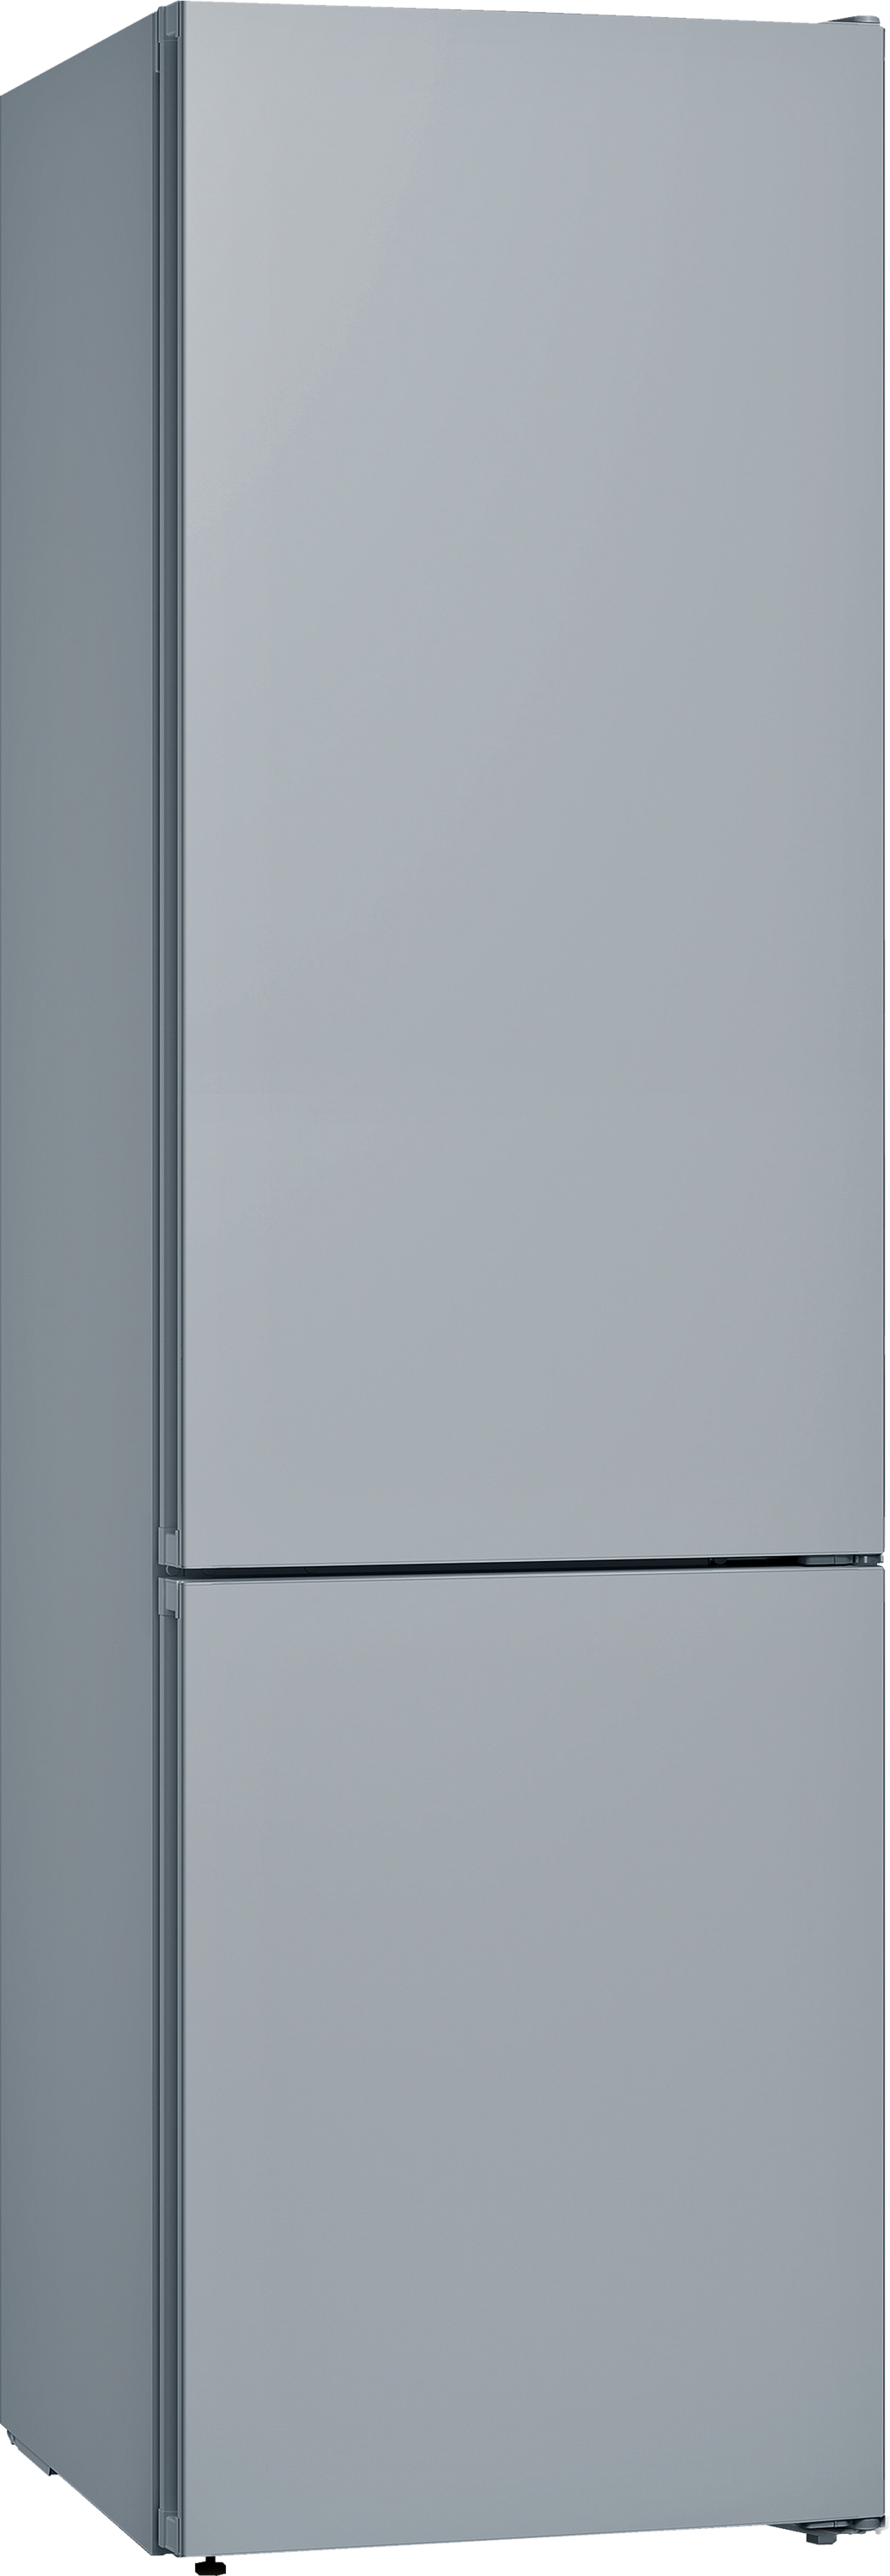 KGN39IJEA Combina frigorifica Vario Style fara panouri deco color, 5 ANI GARANTIE, 203 x 60 cm. Clasa Energetica E 